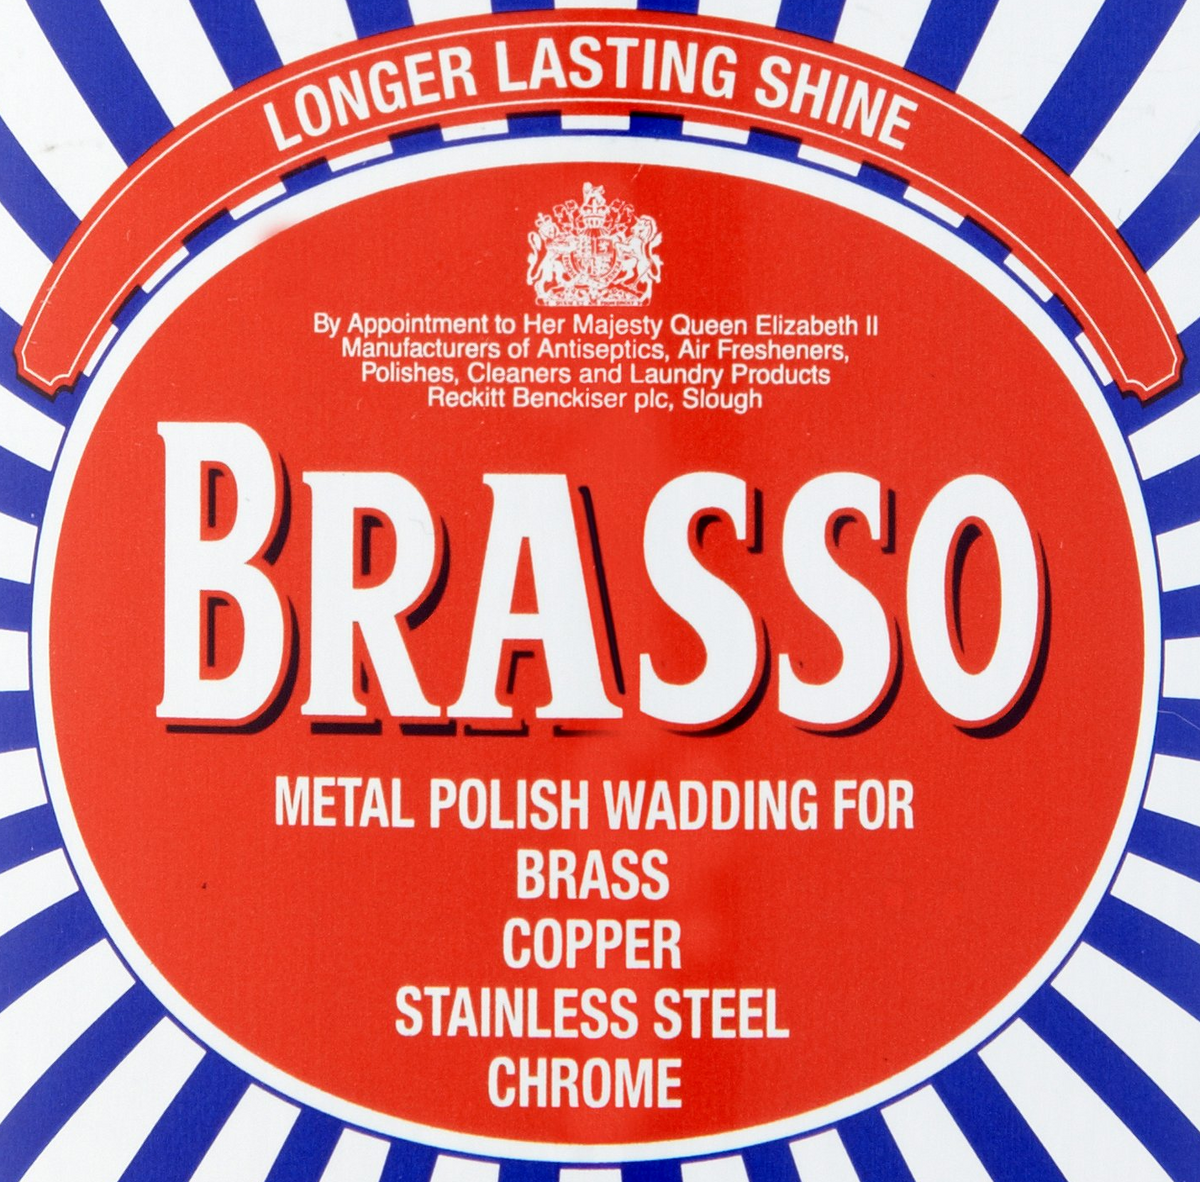 Brasso - Wikipedia